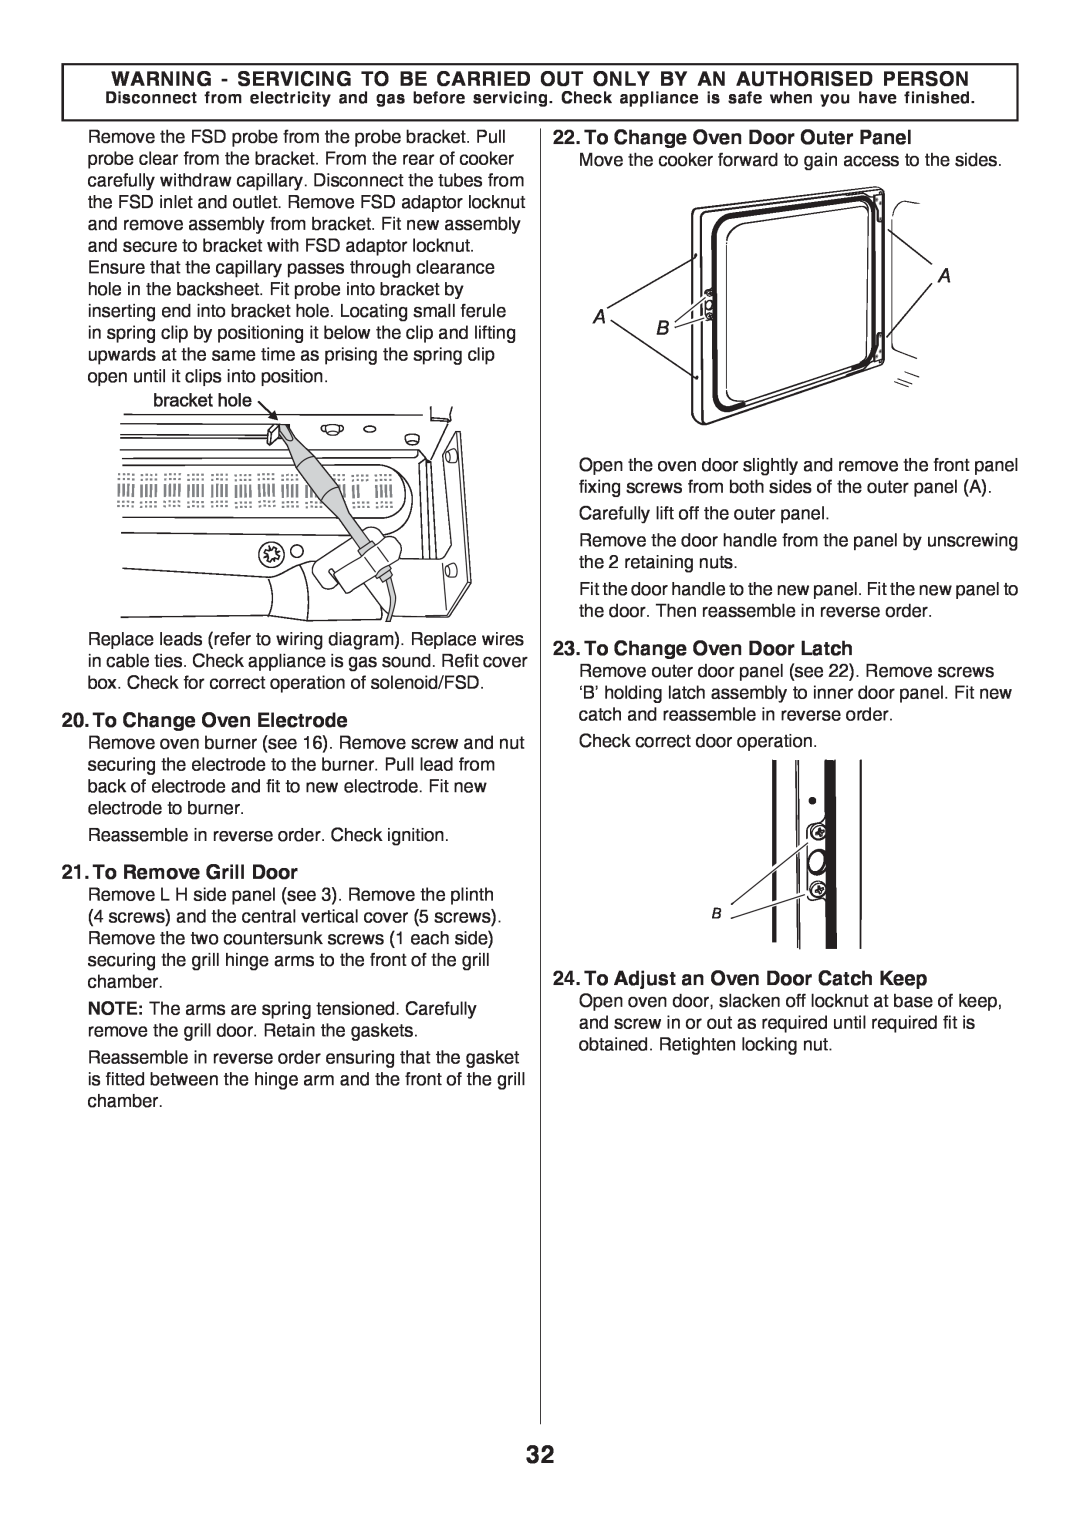 Rangemaster U106140-05 manual To Change Oven Electrode, To Remove Grill Door, To Change Oven Door Outer Panel 